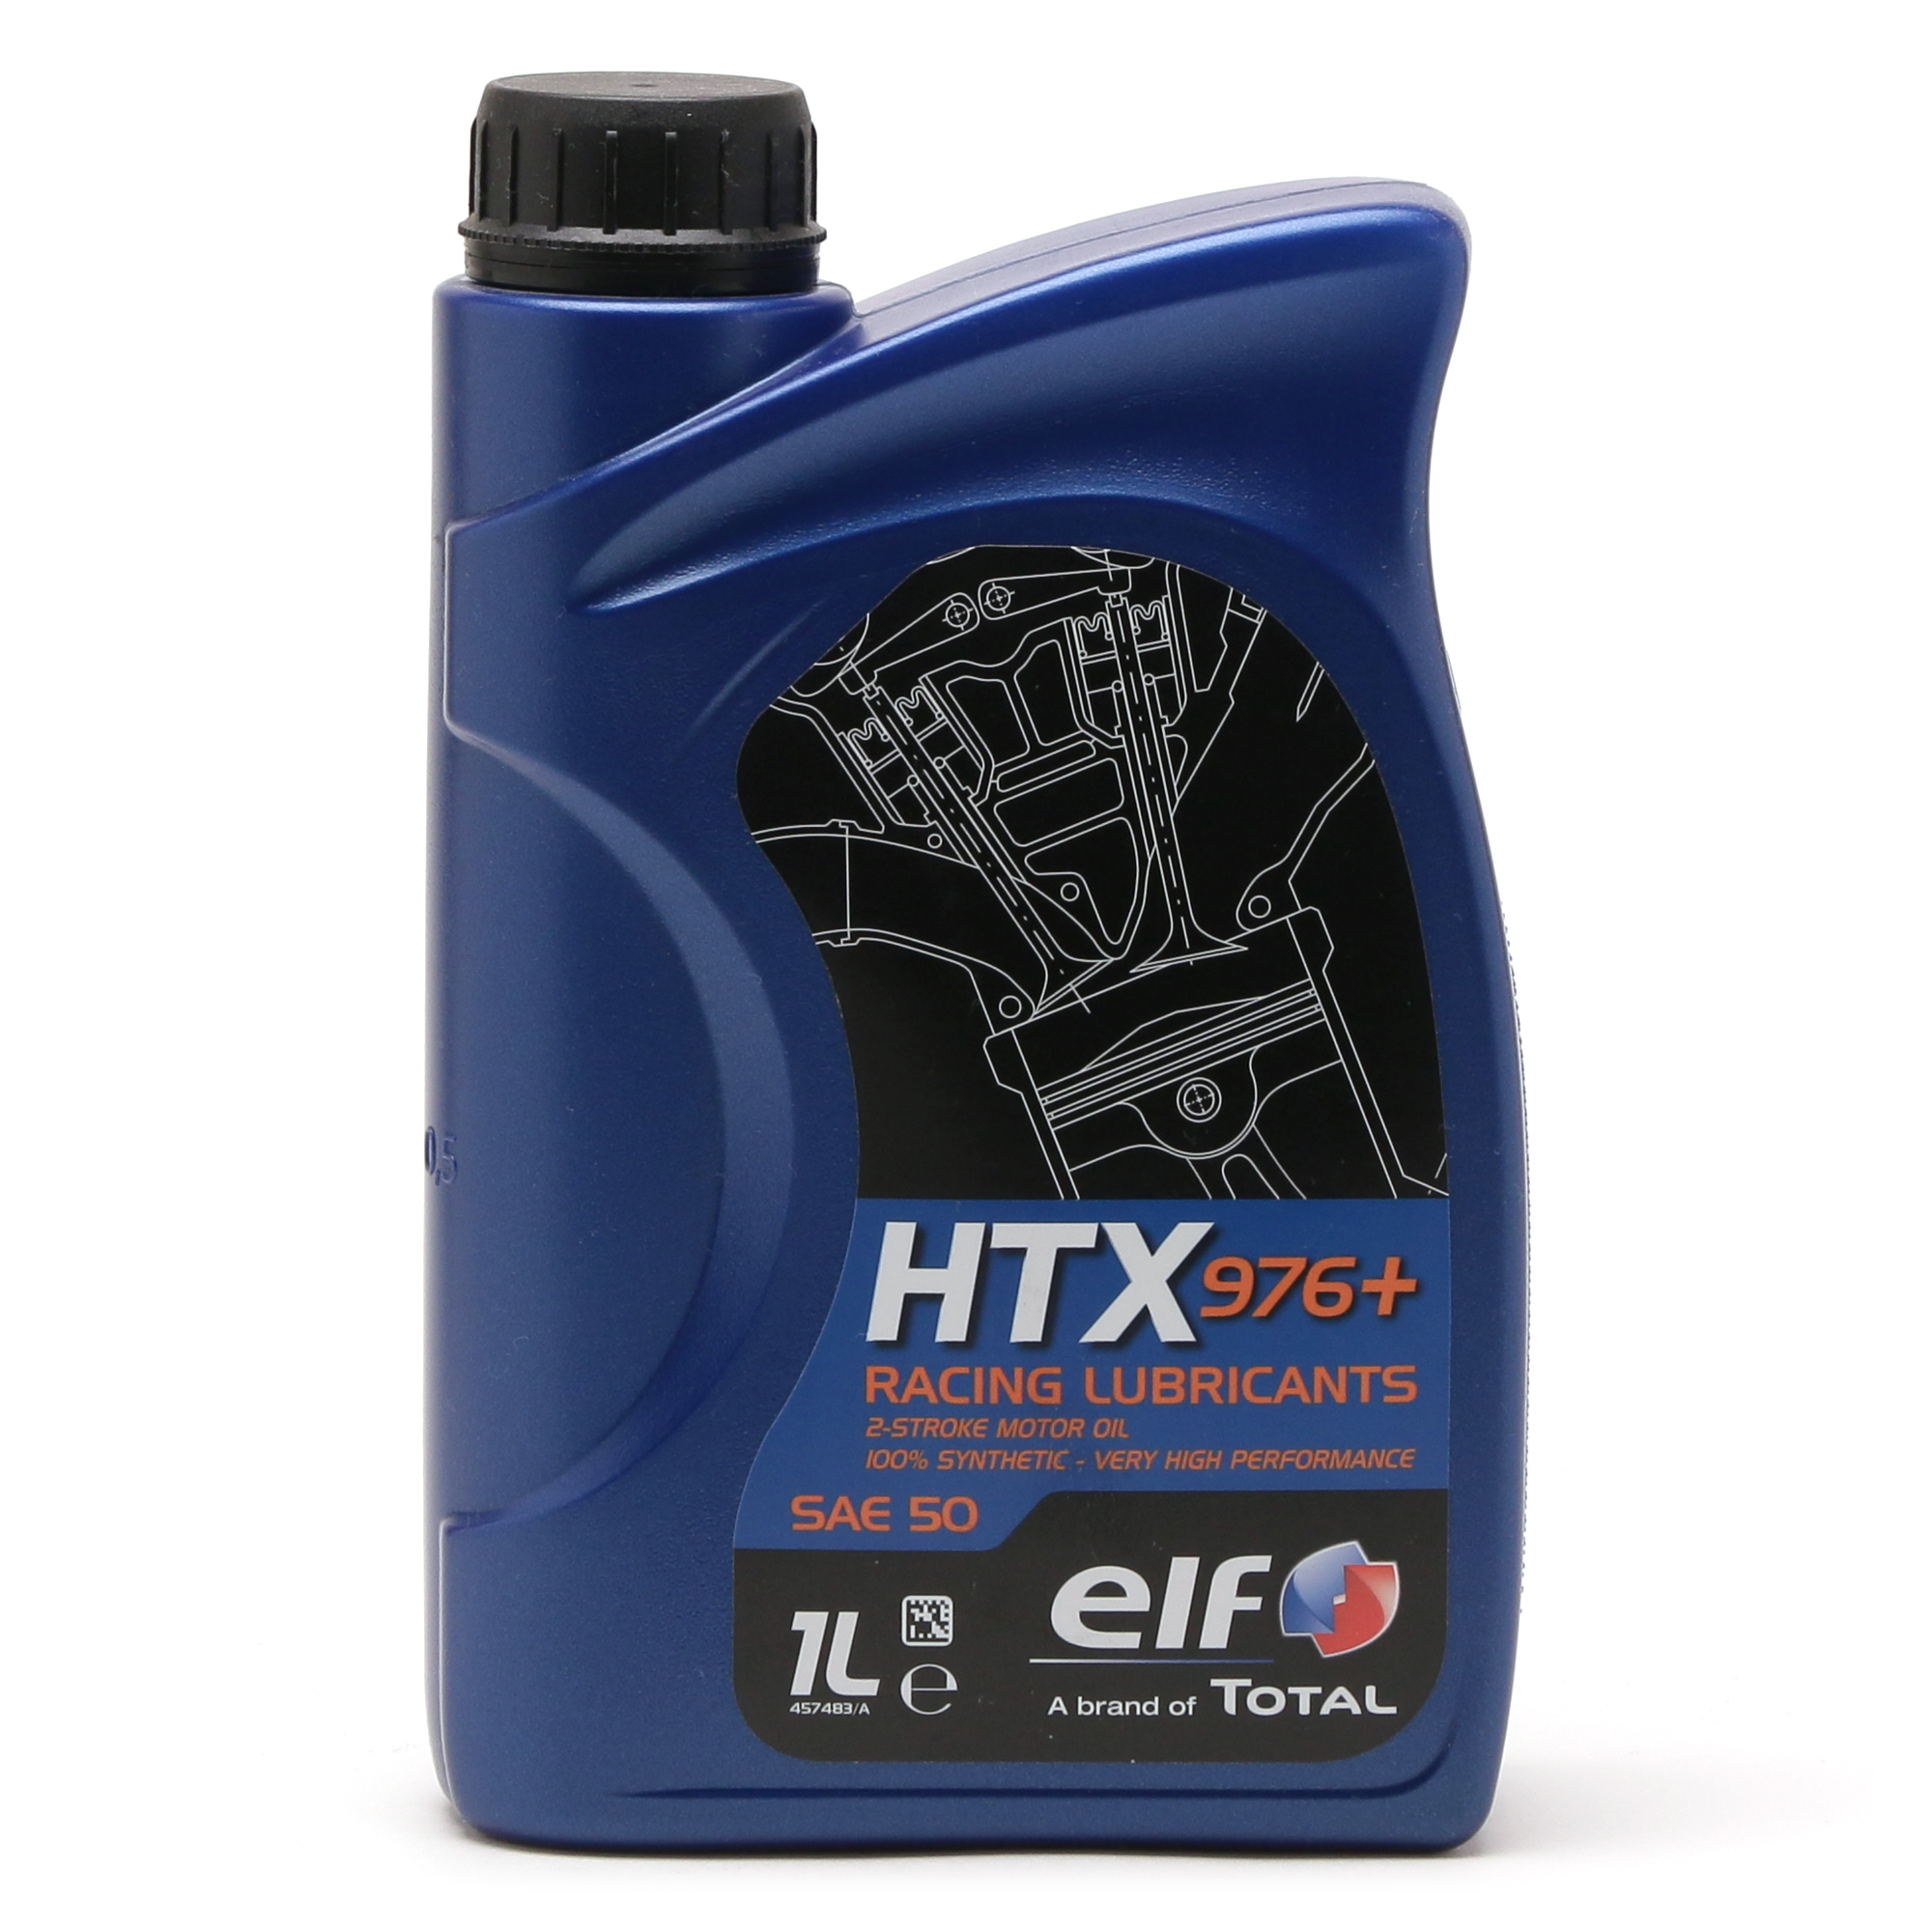 Elf HTX 976+ Racing Lubricants 100 % Synthetic / Rennöl / 2-T Motoröl 1l - 2 -Takt vollsynthetisch - Motoröl 2-Takt - Bike/ Motorrad/ 2-Rad - Öle 